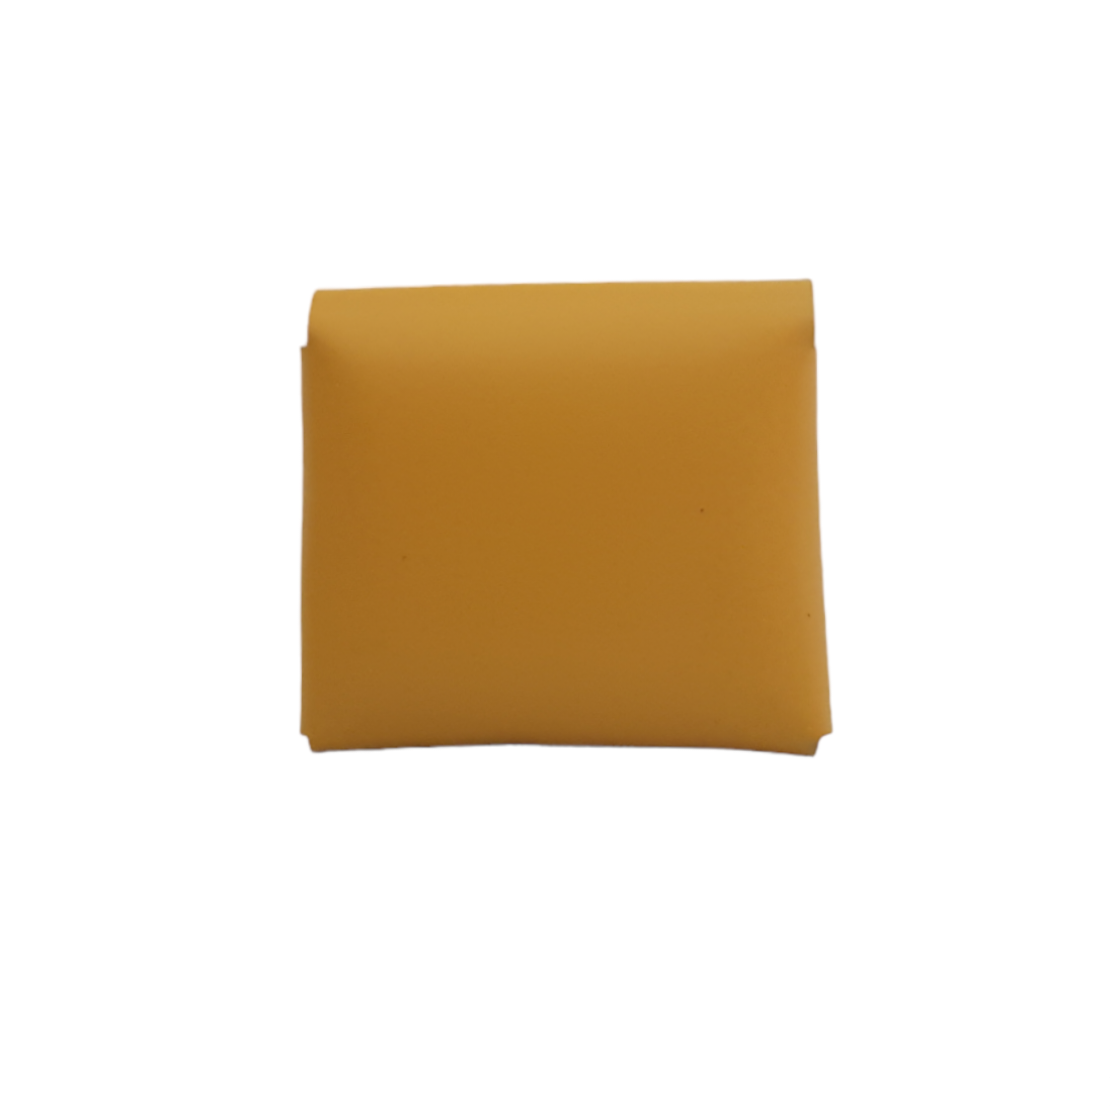 Handmade Leather Simple Coin Purse - Yellow Ochre-2